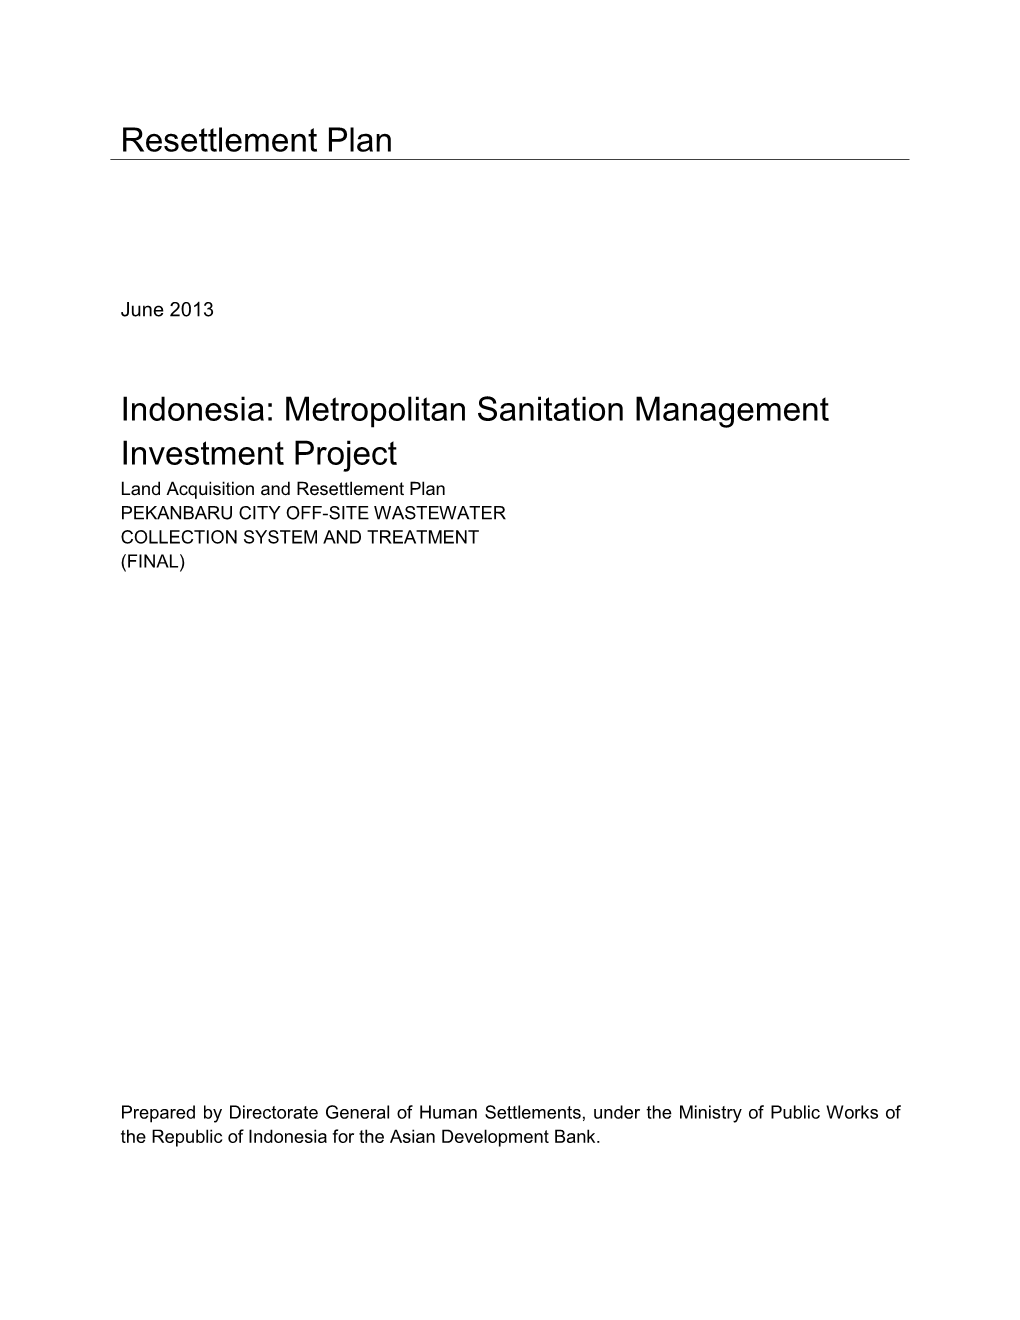 Metropolitan Sanitation Management Investment Project: Pekanbaru City